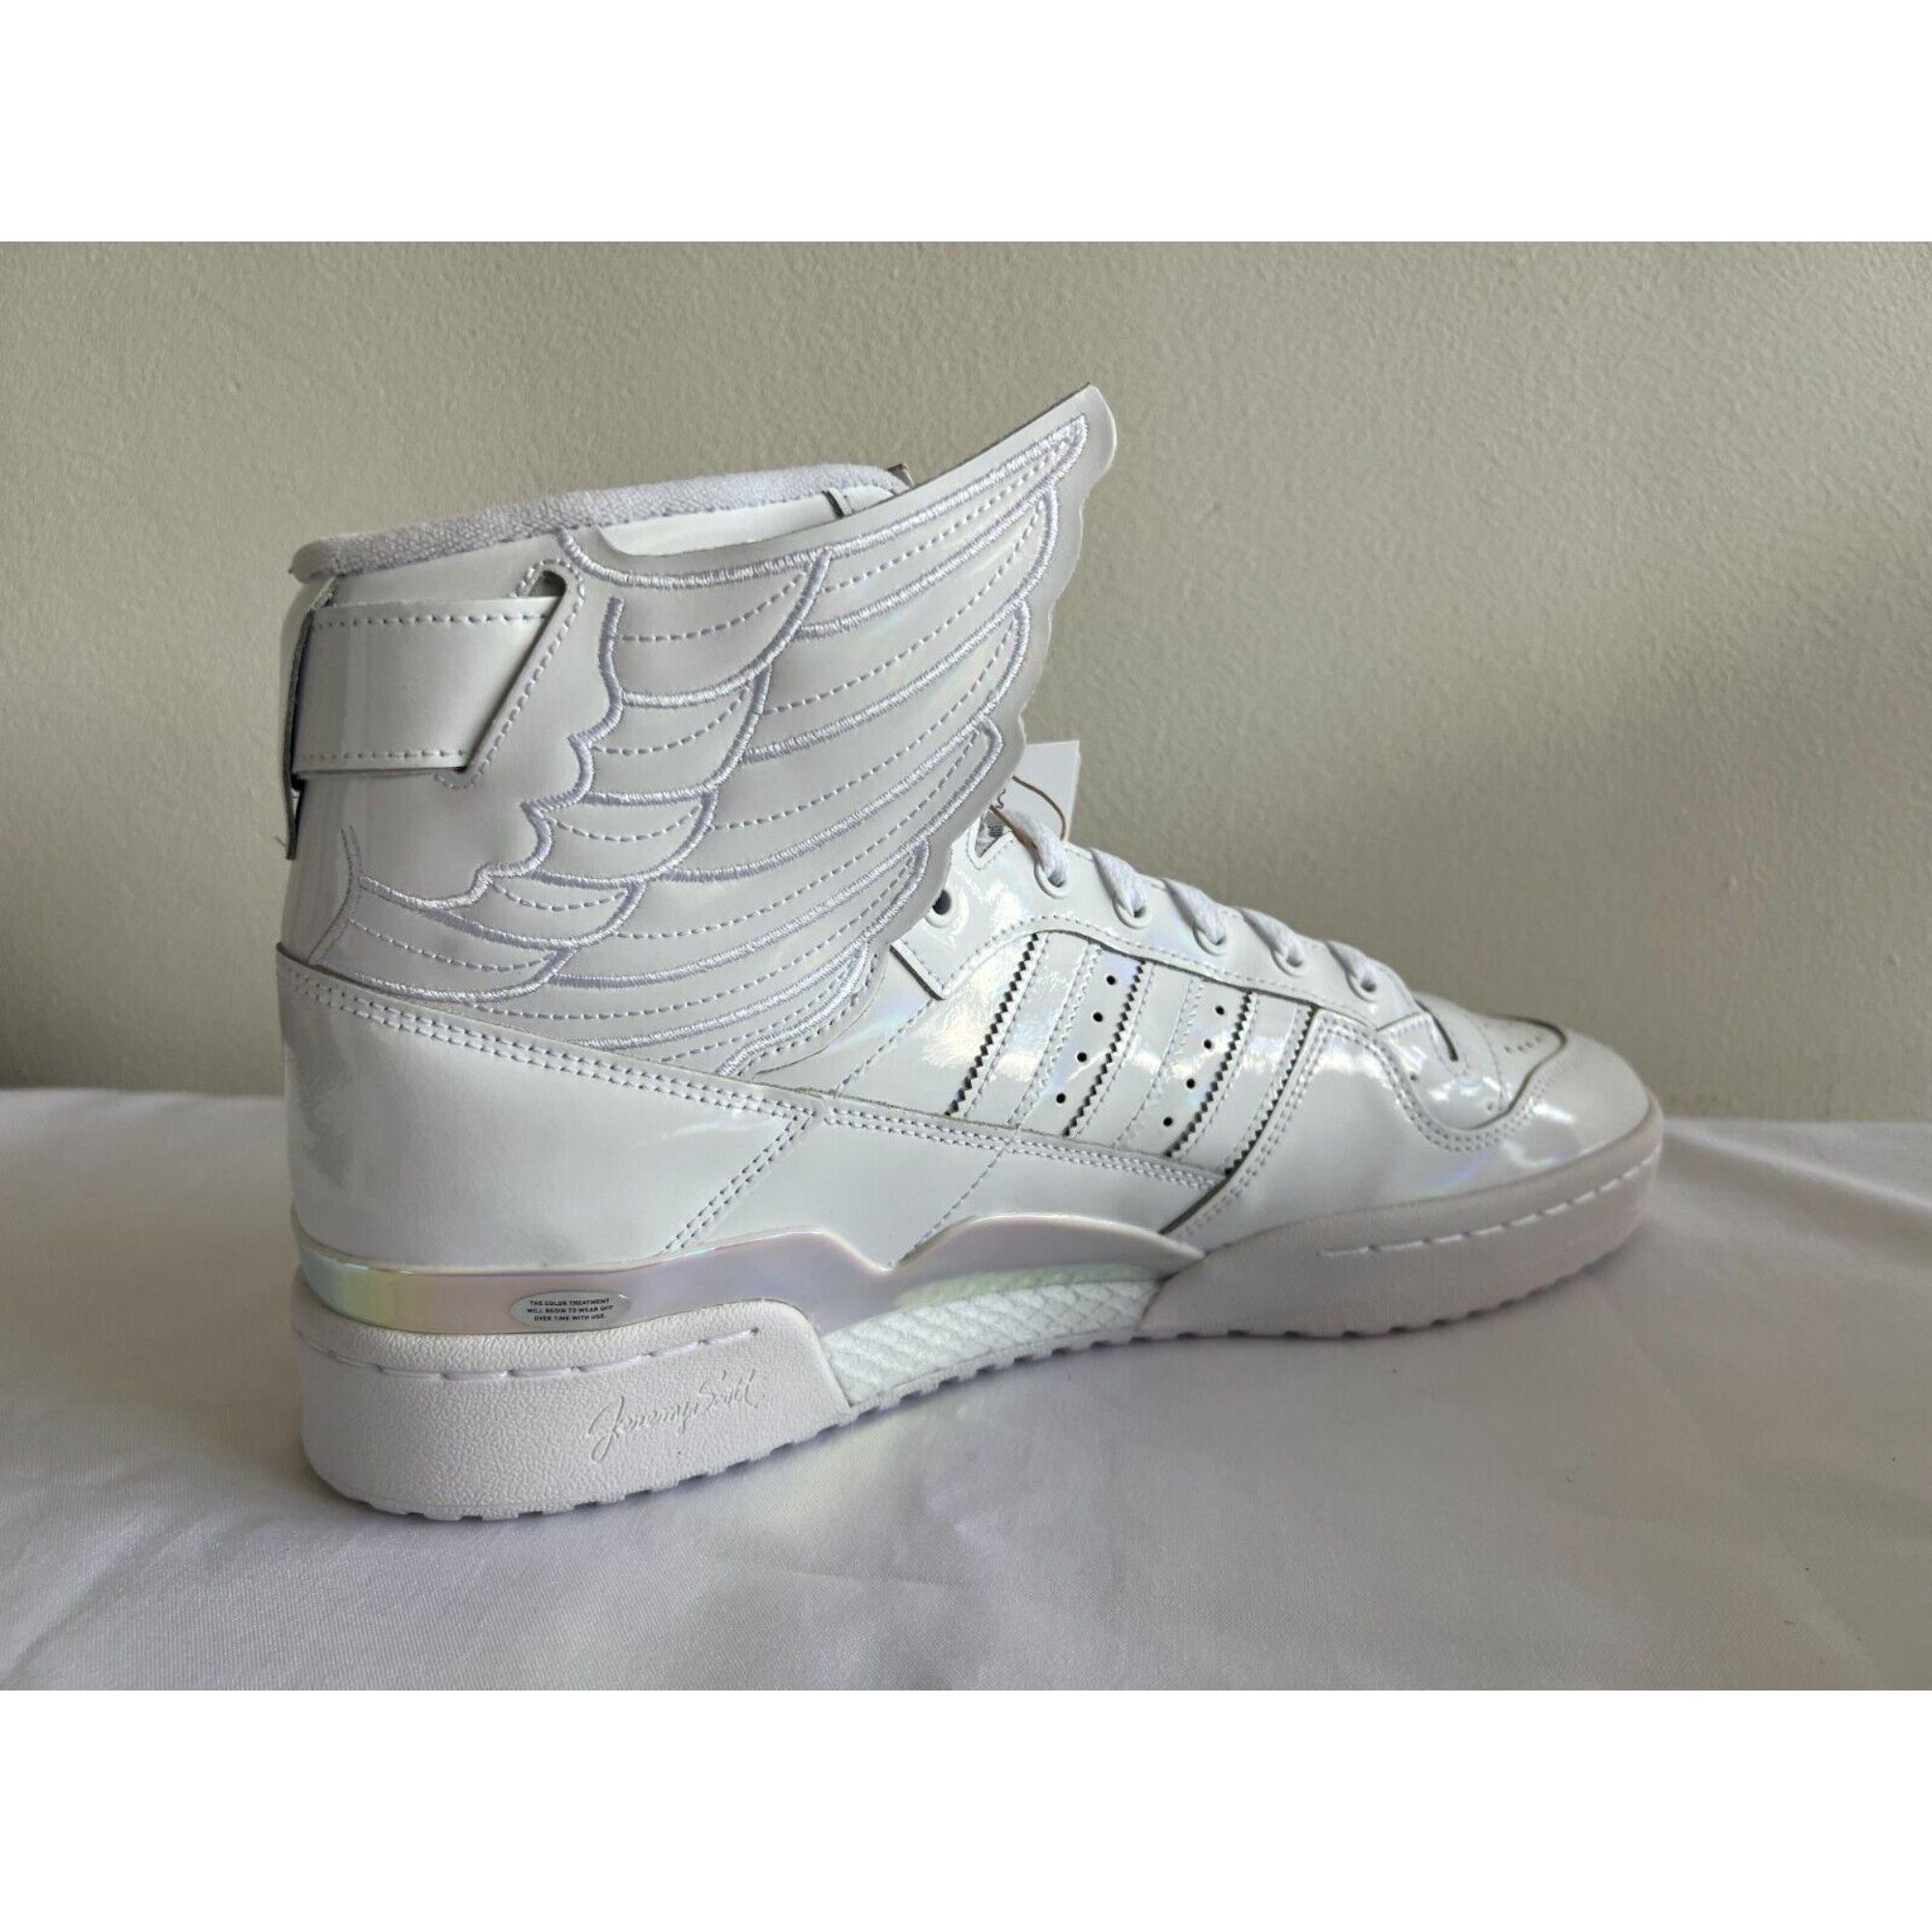 Adidas Originals ObyO Jeremy Scott Wings 4.0 Core Cloud White / Black Sneakers

Informations supplémentaires :
MATERIAL : Cuir synthétique
Couleur : blanc
Taille : 14
Style : Whiting
Motif : Solide
Condit : Neuf dans la boîte d'origine*
Disponible